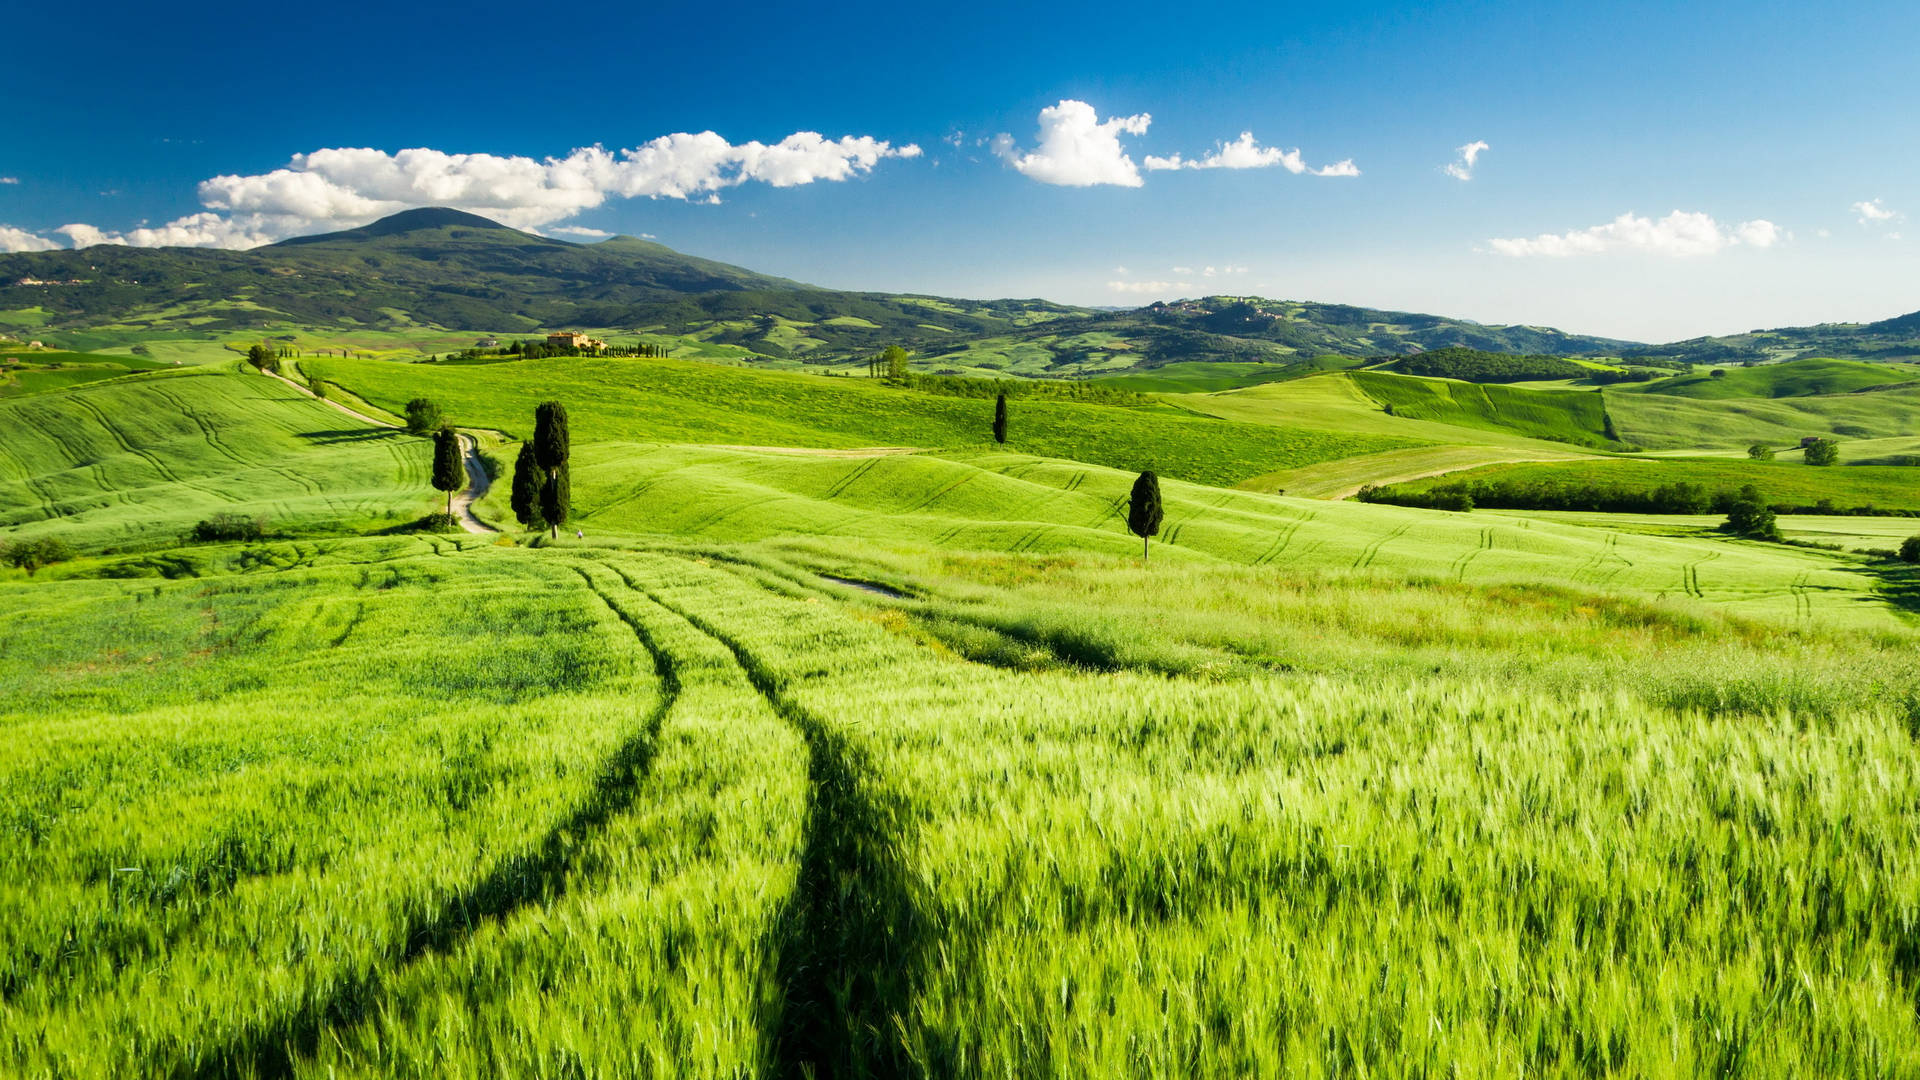 Grassy Landscape In Tuscany Italy Wallpaper